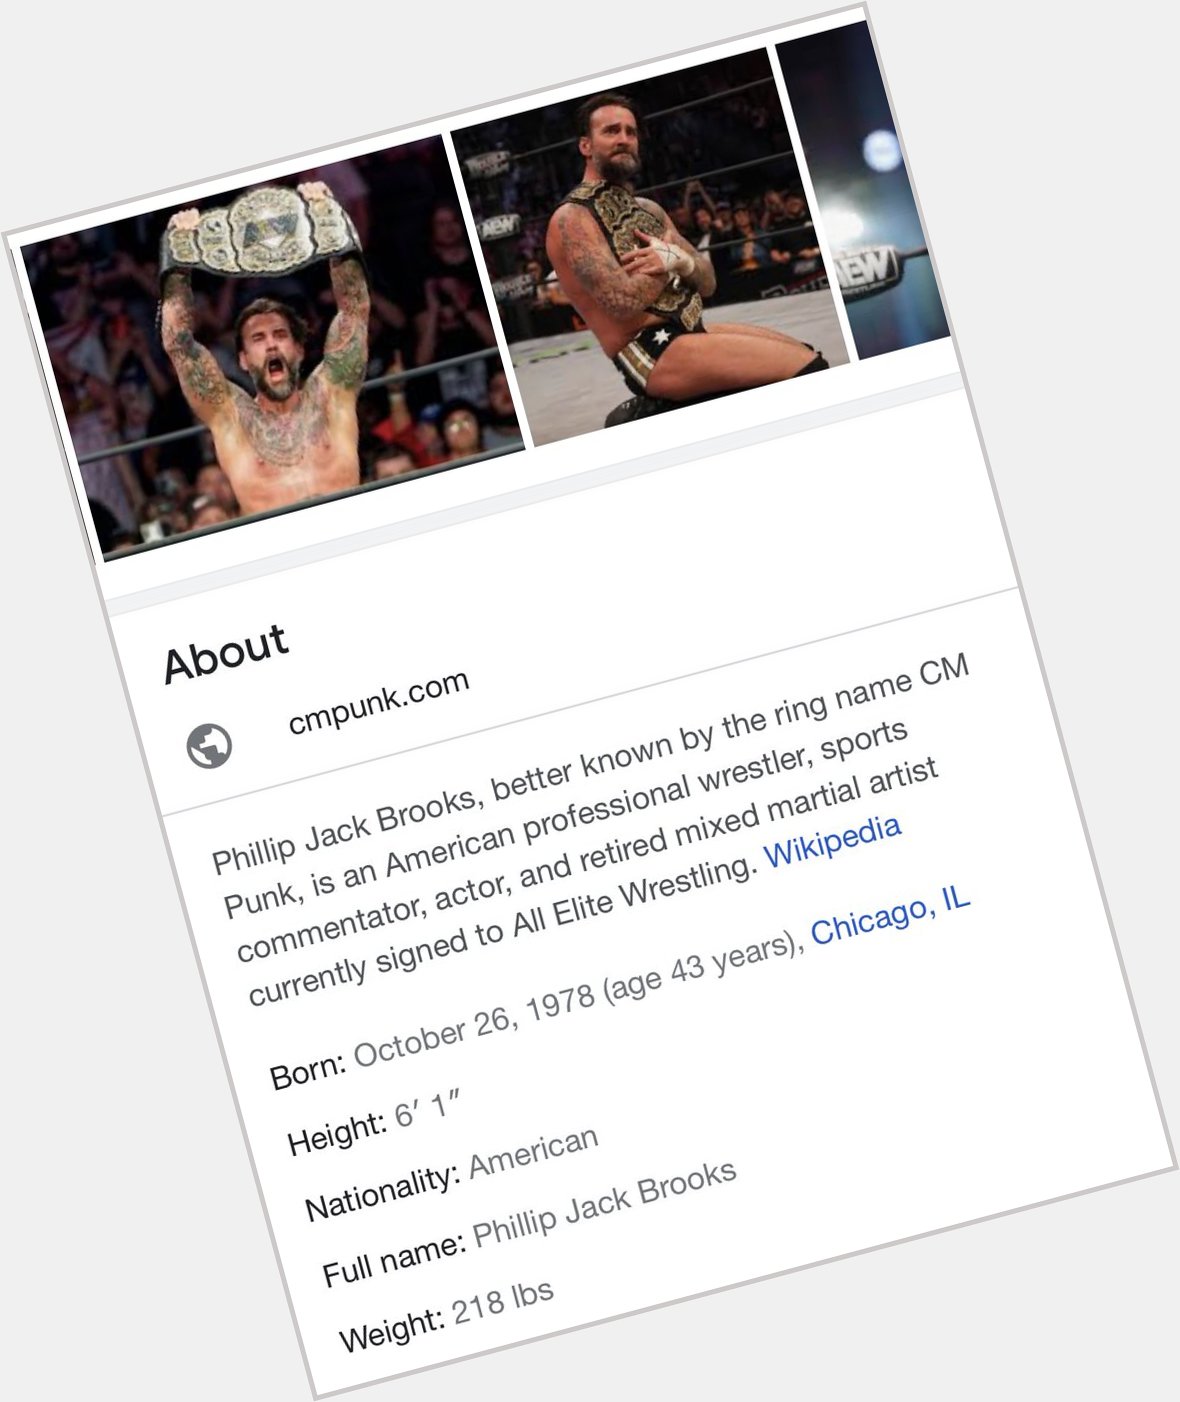 CM Punk s birthday is next month.

Does AEW wish him Happy Birthday on social media? 